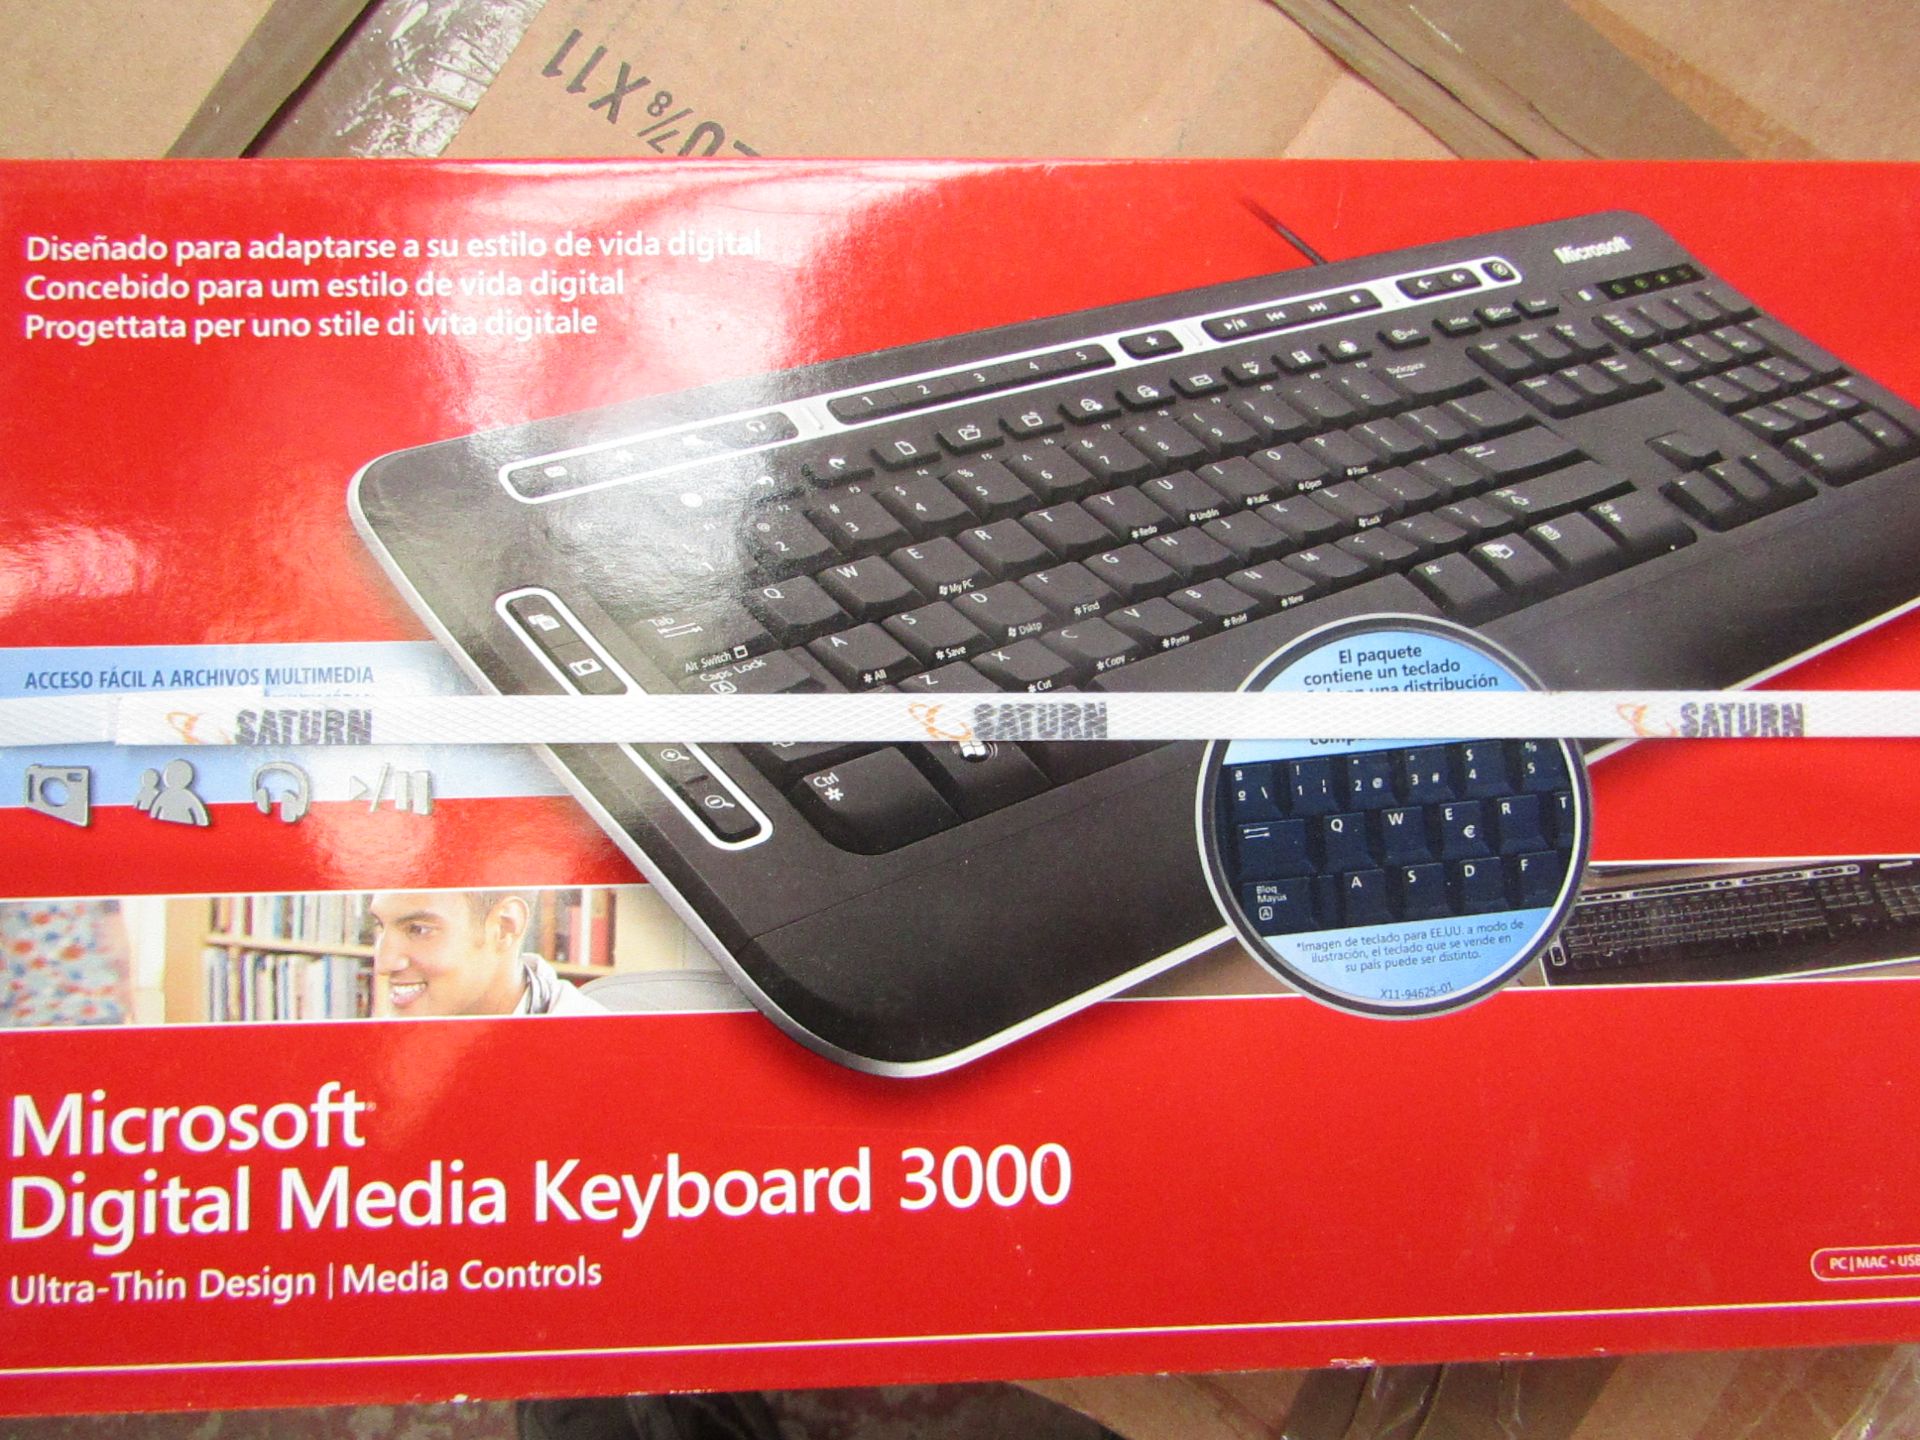 Microsoft digital media keyboard 3000, boxed and tested working